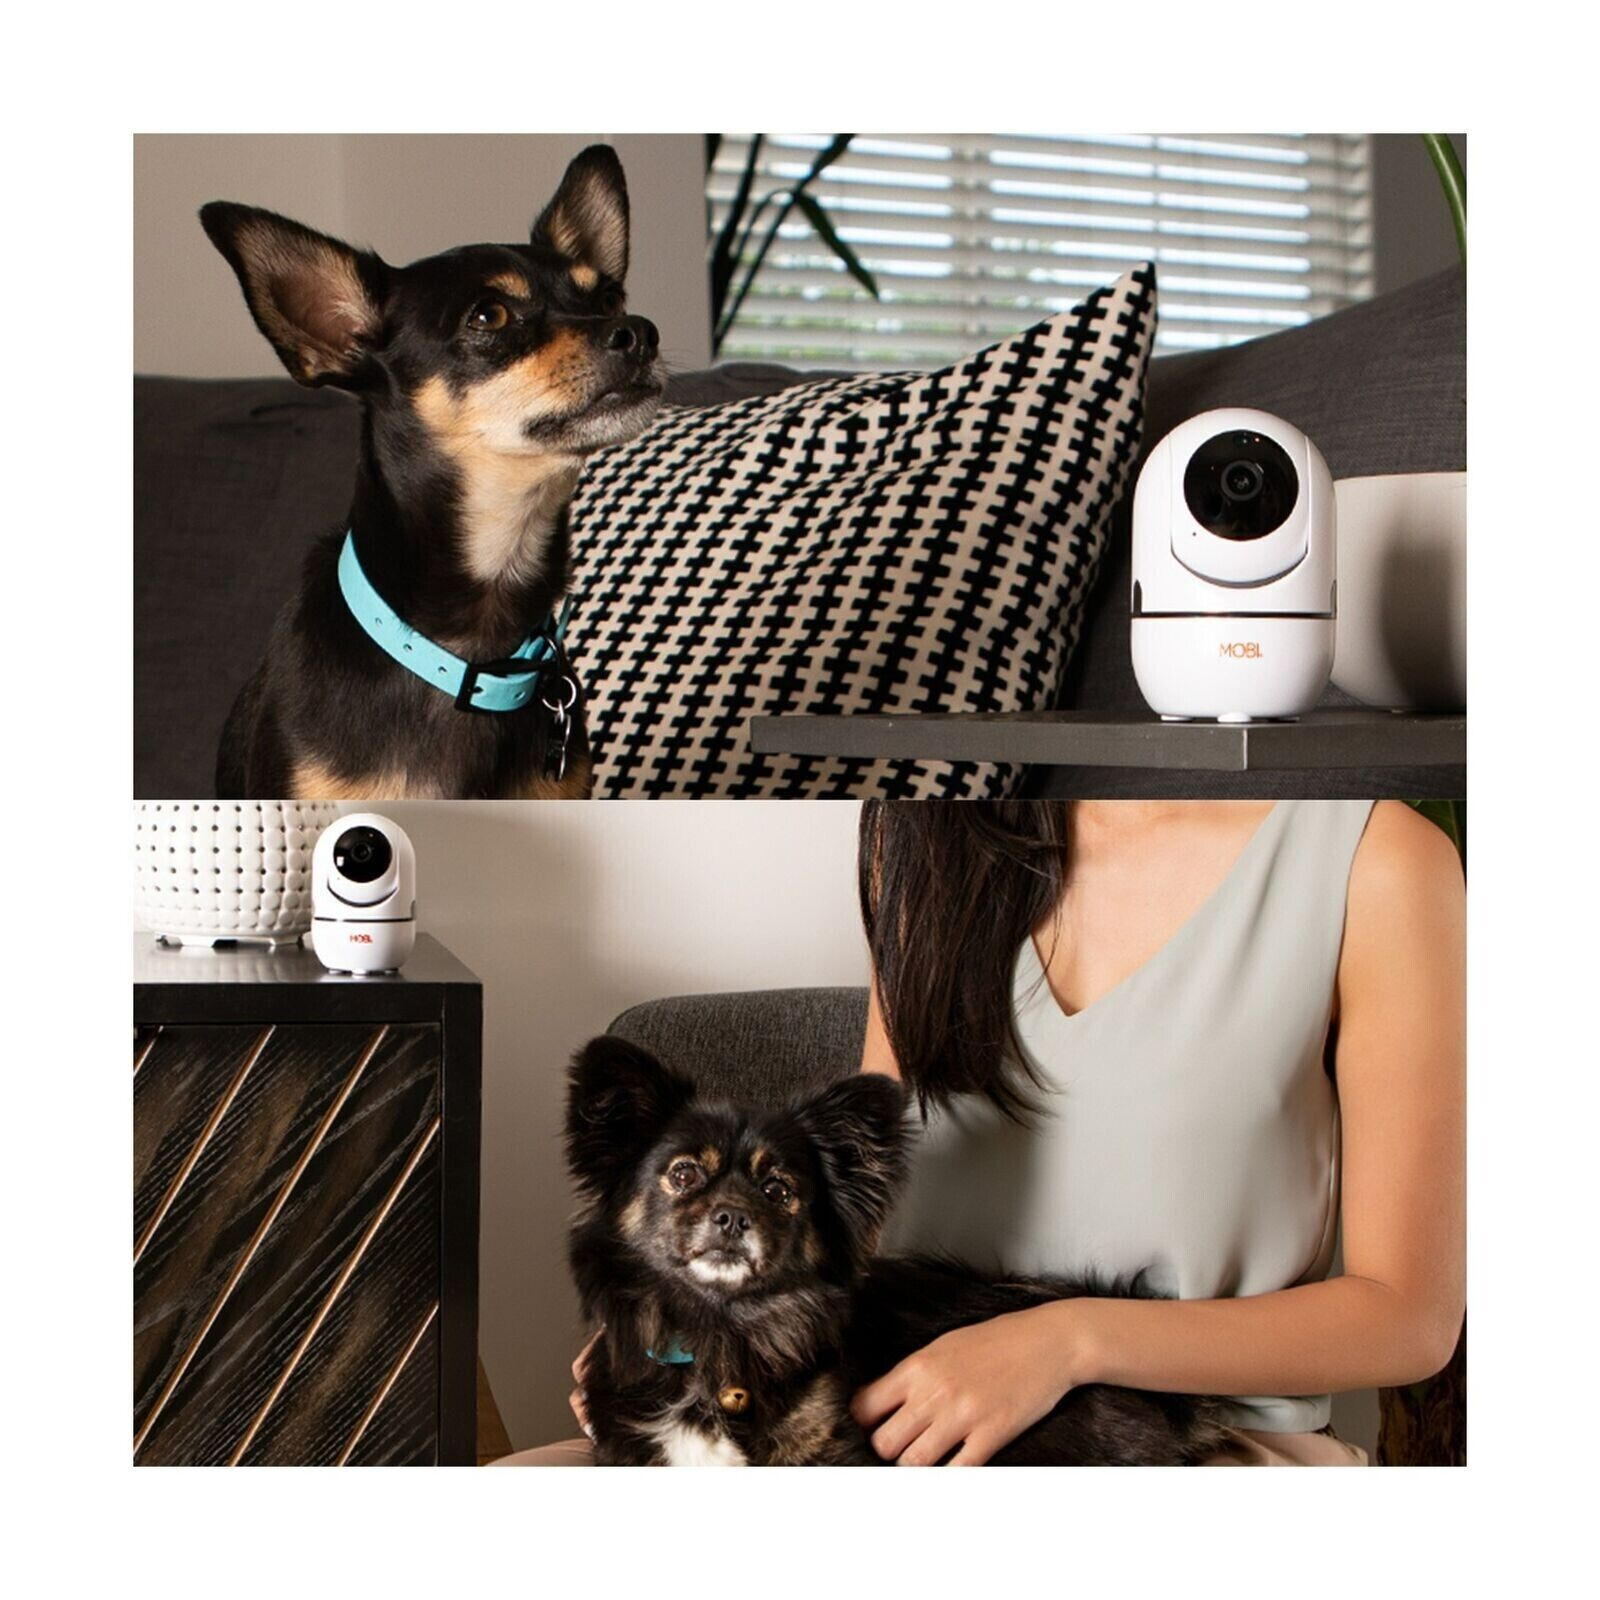 MobiCam HDX Smart HD Pet Monitor Wi-Fi Camera, Multi Room Monitoring Expandable